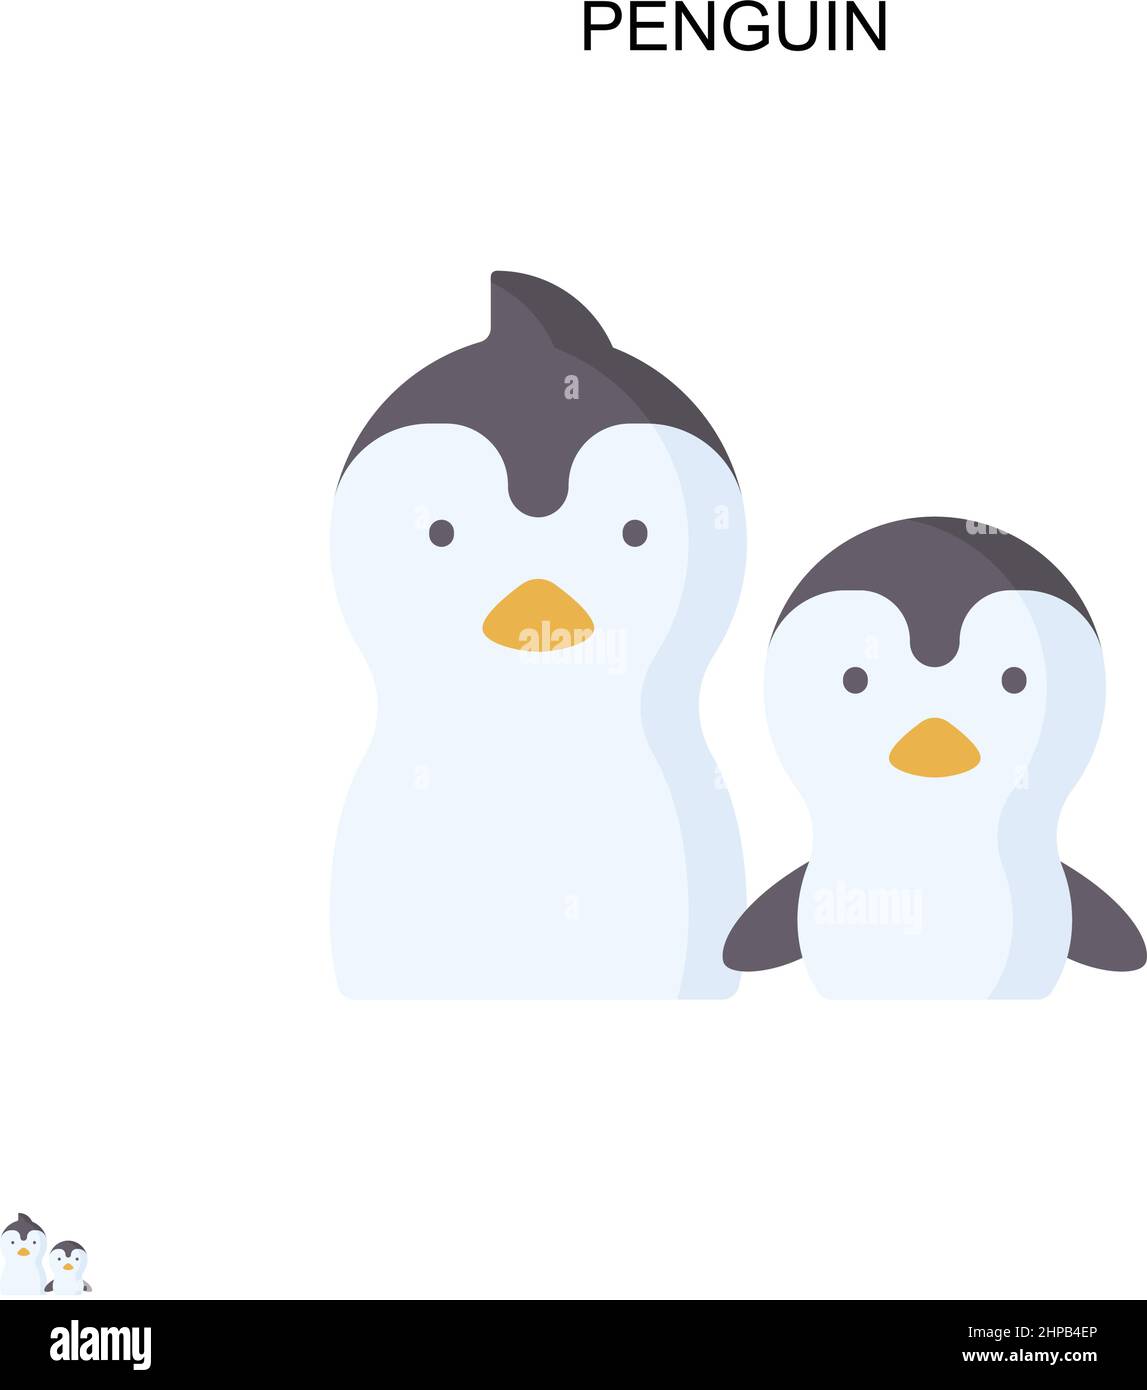 Pinguine web -Fotos und -Bildmaterial in hoher Auflösung – Alamy